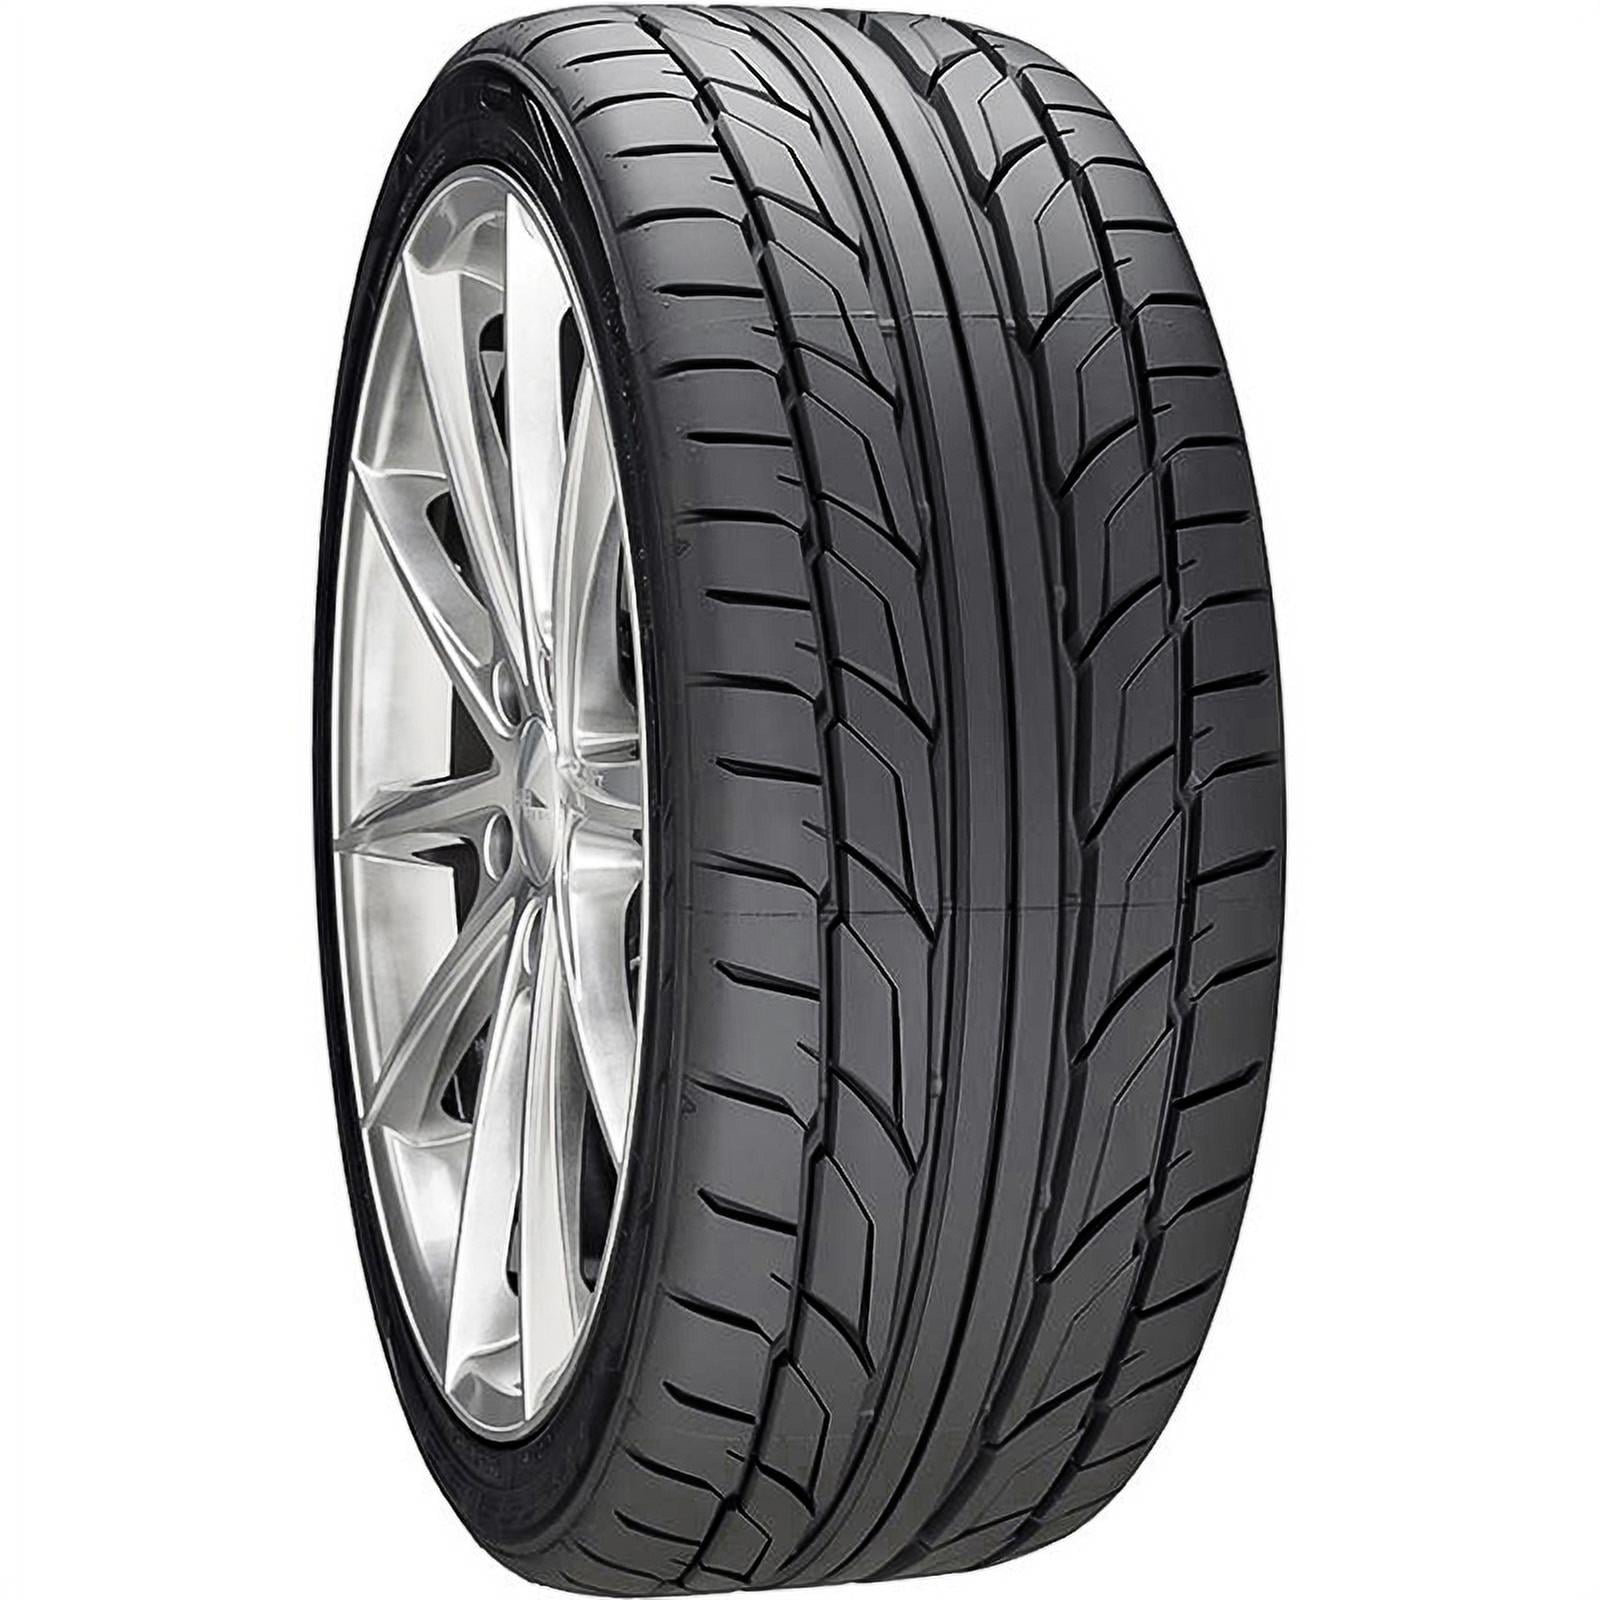 Nitto NT555 G2 245/30ZR20 90W XL High Performance Tire - Walmart.com